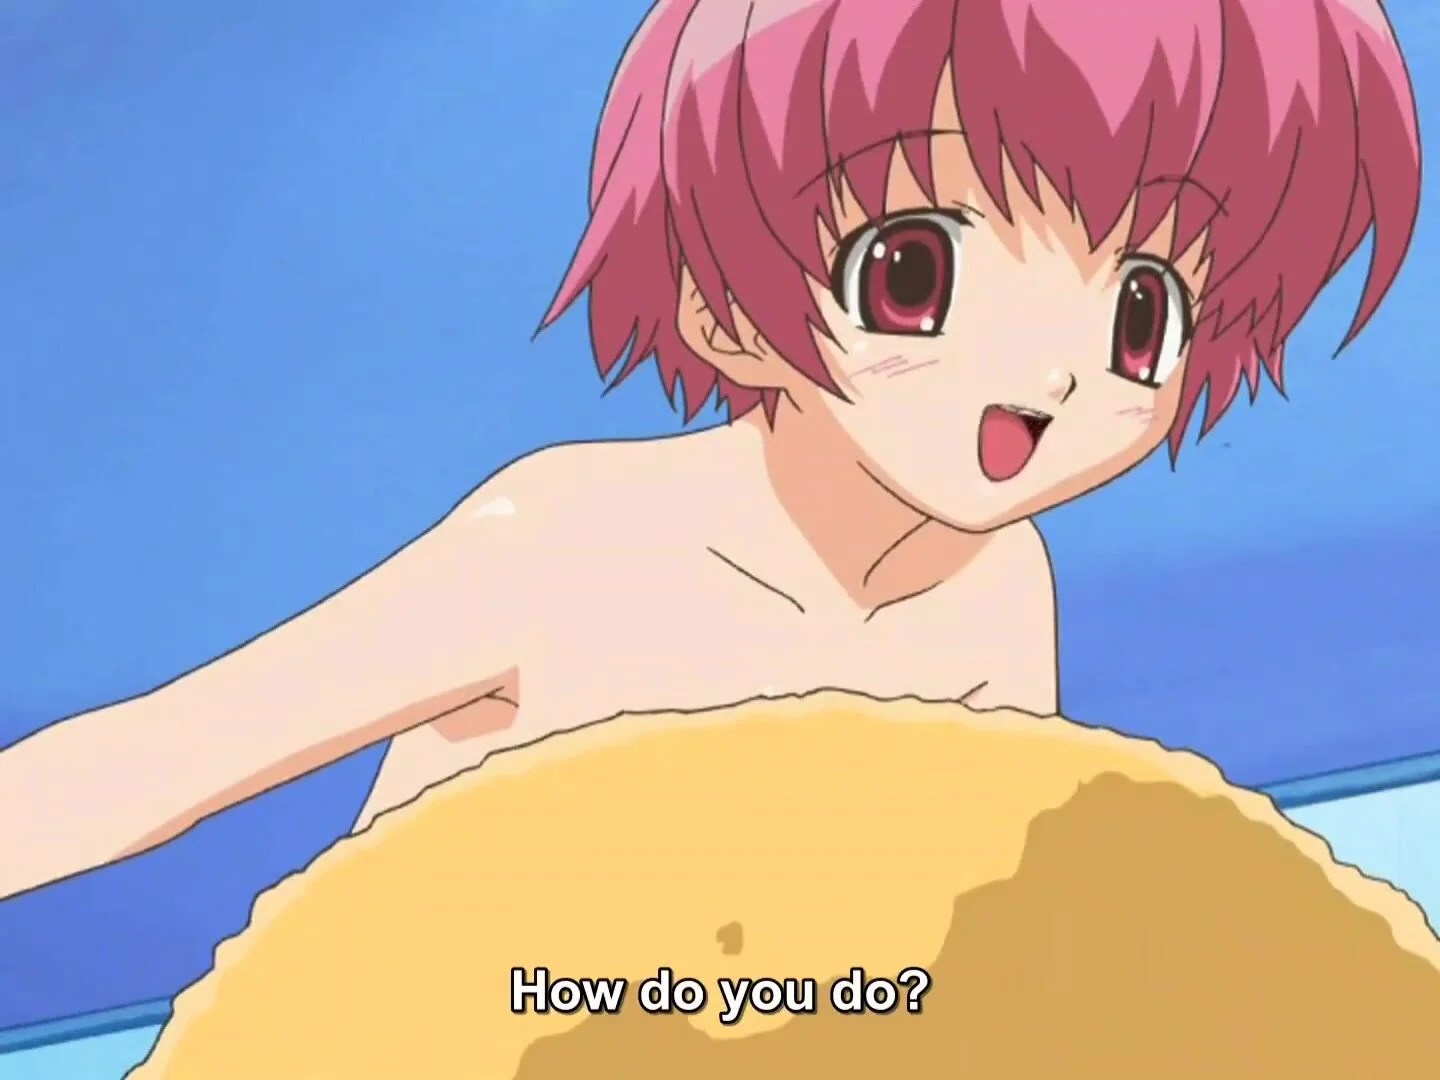 Pregnant Anime Chicks Naked - Naked anime girl censored in funny ways - ThisVid.com